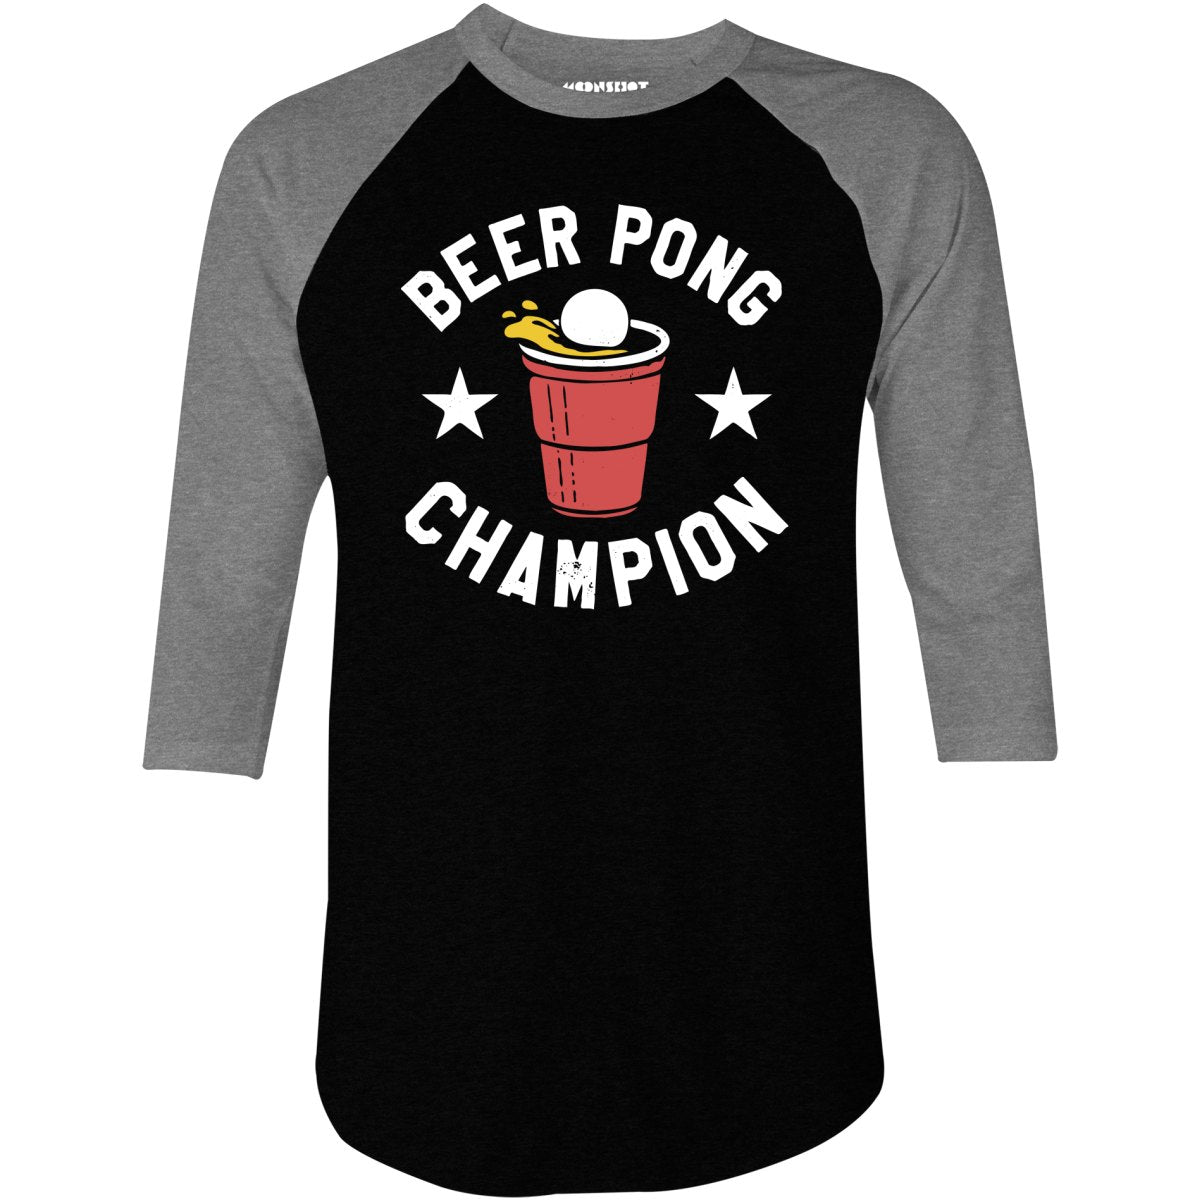 Beer Pong Champion - 3/4 Sleeve Raglan T-Shirt